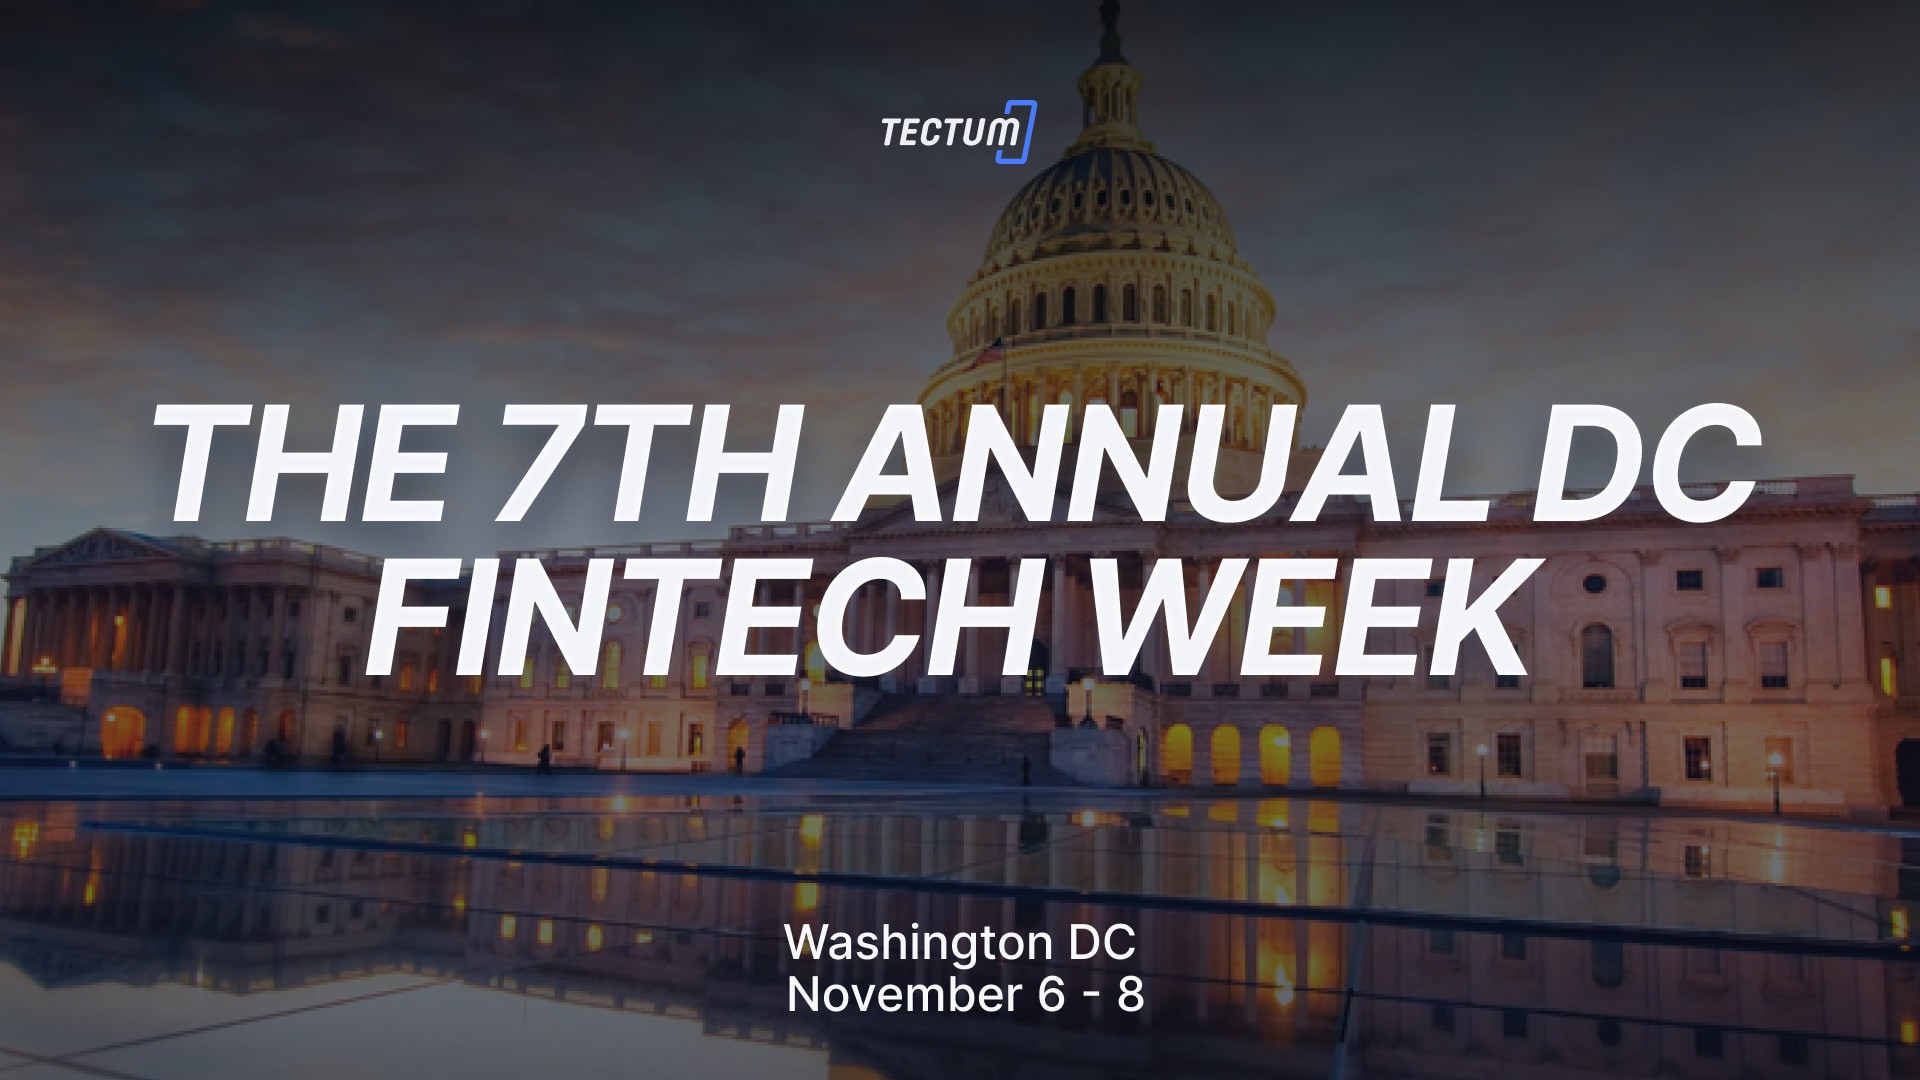 7th Annual DC Fintech Week